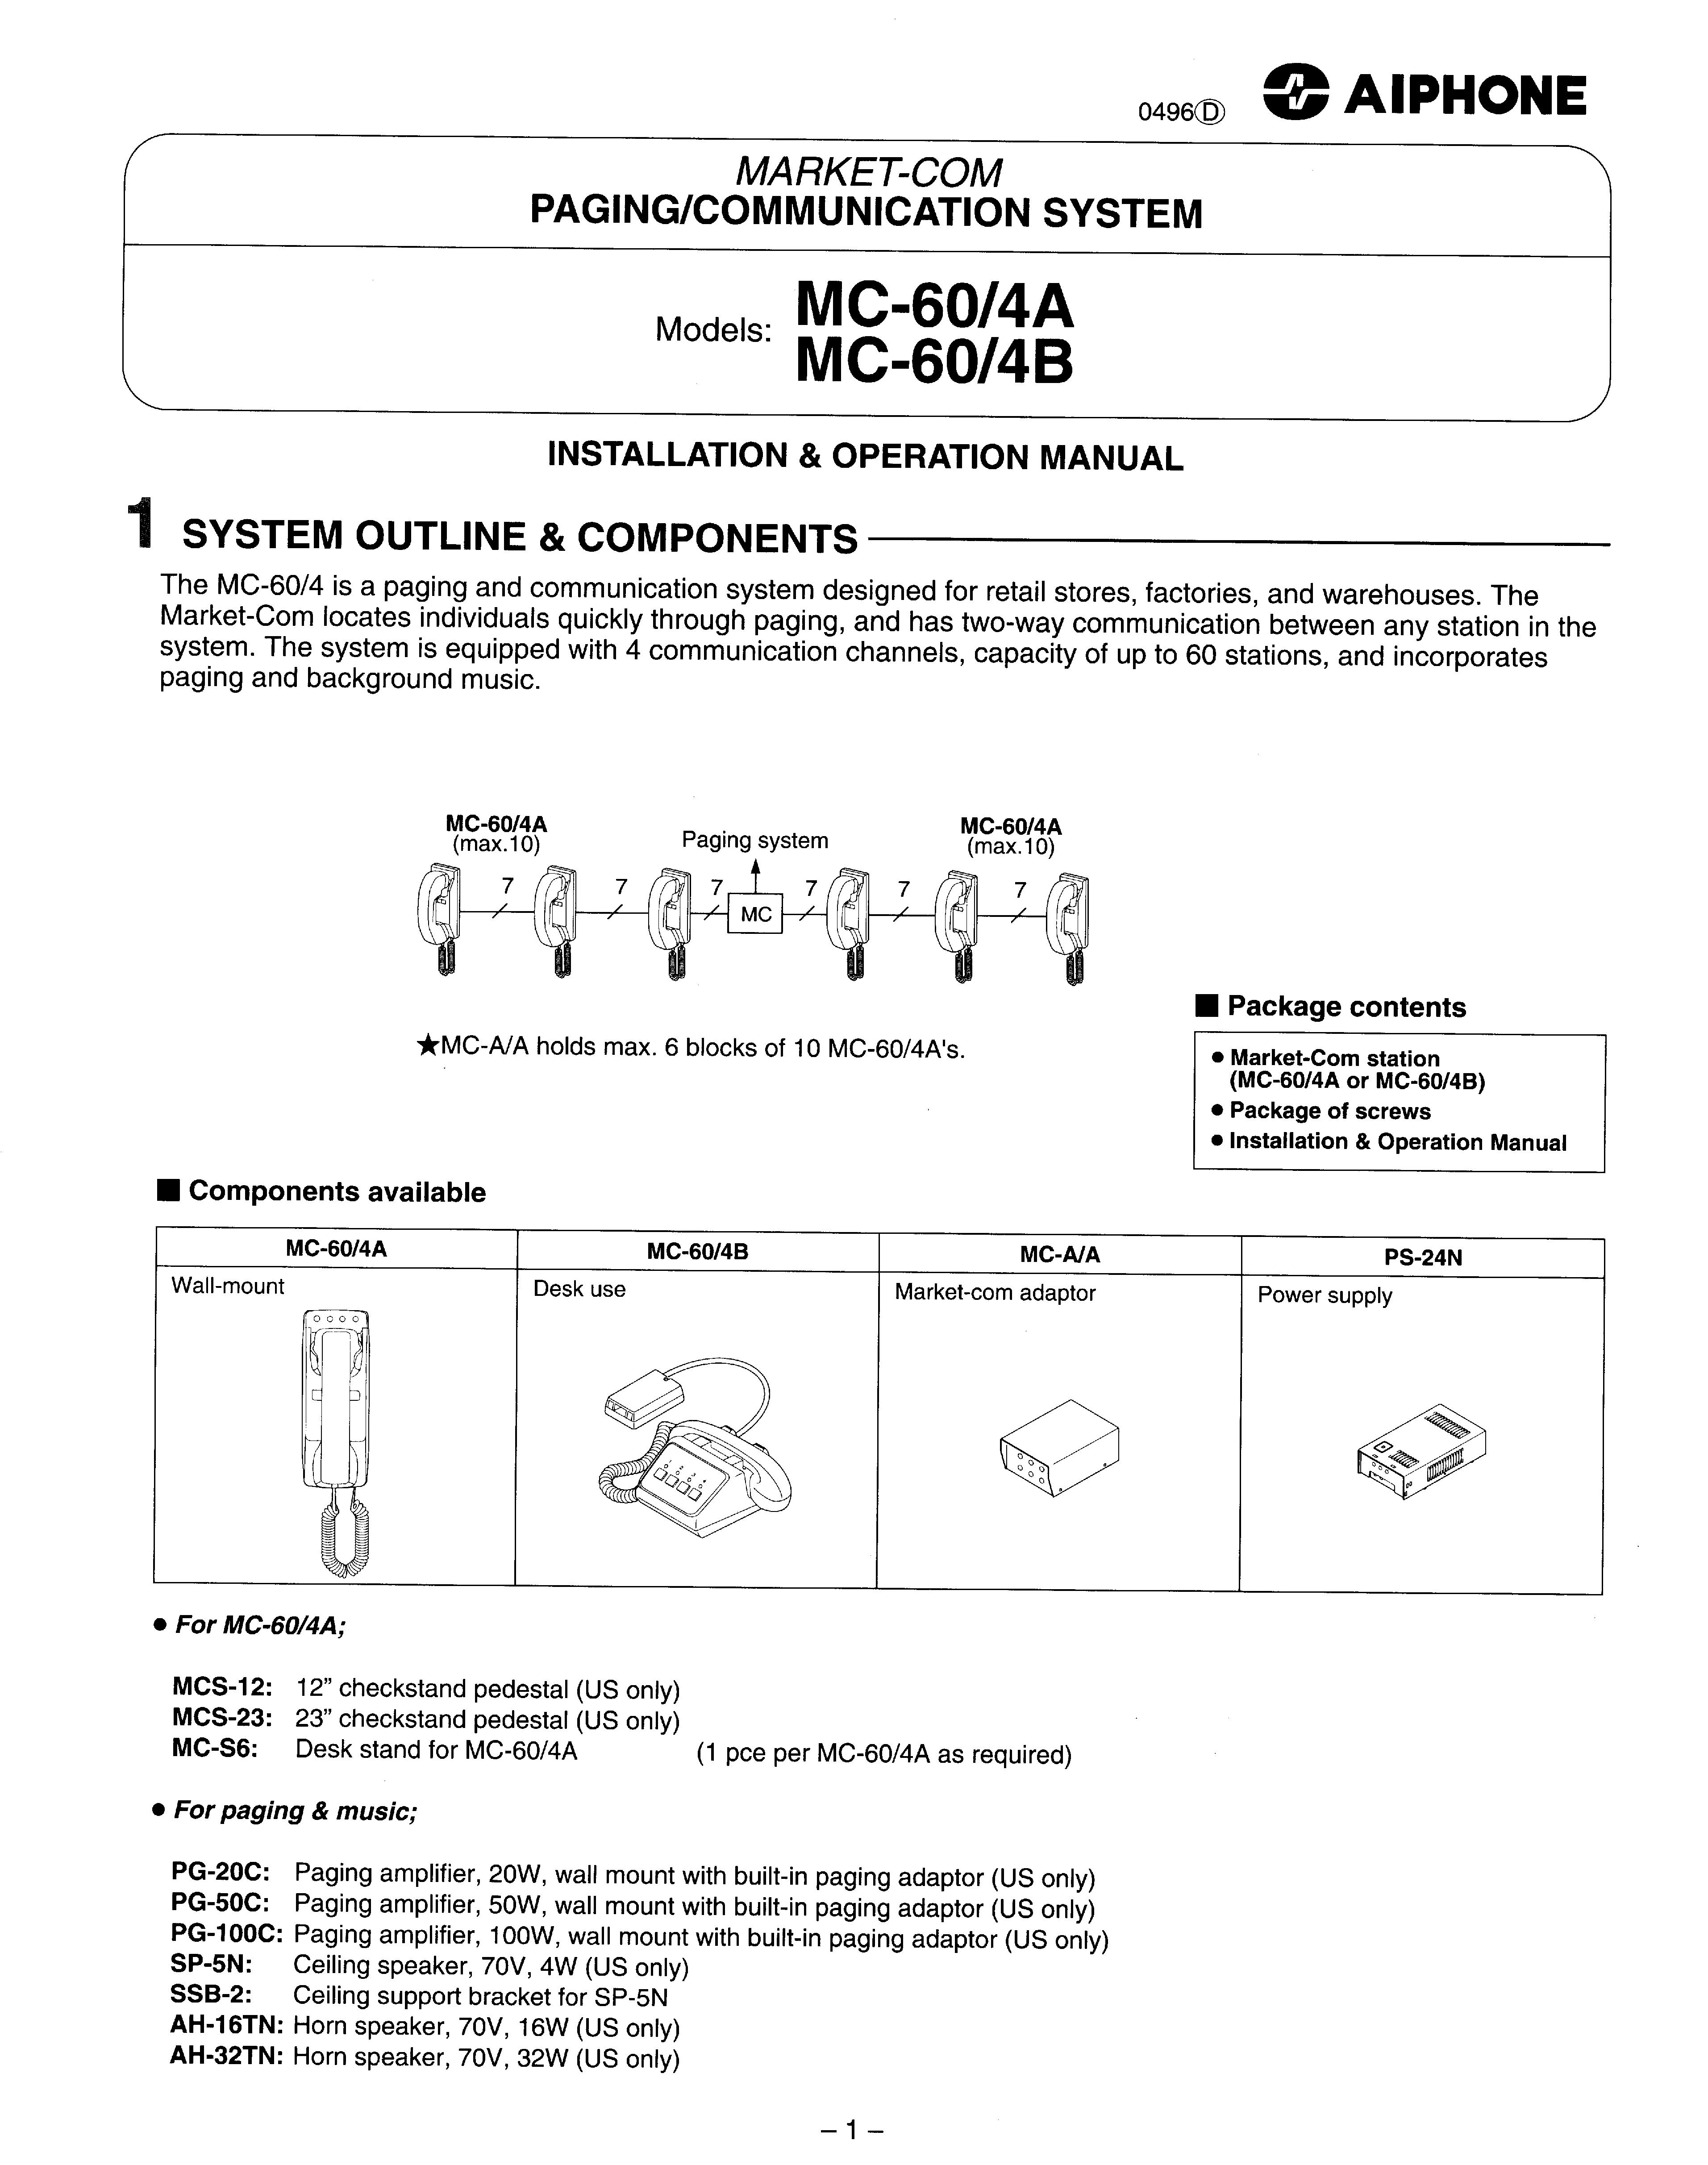 Aiphone MC-60/4B Marine Radio User Manual